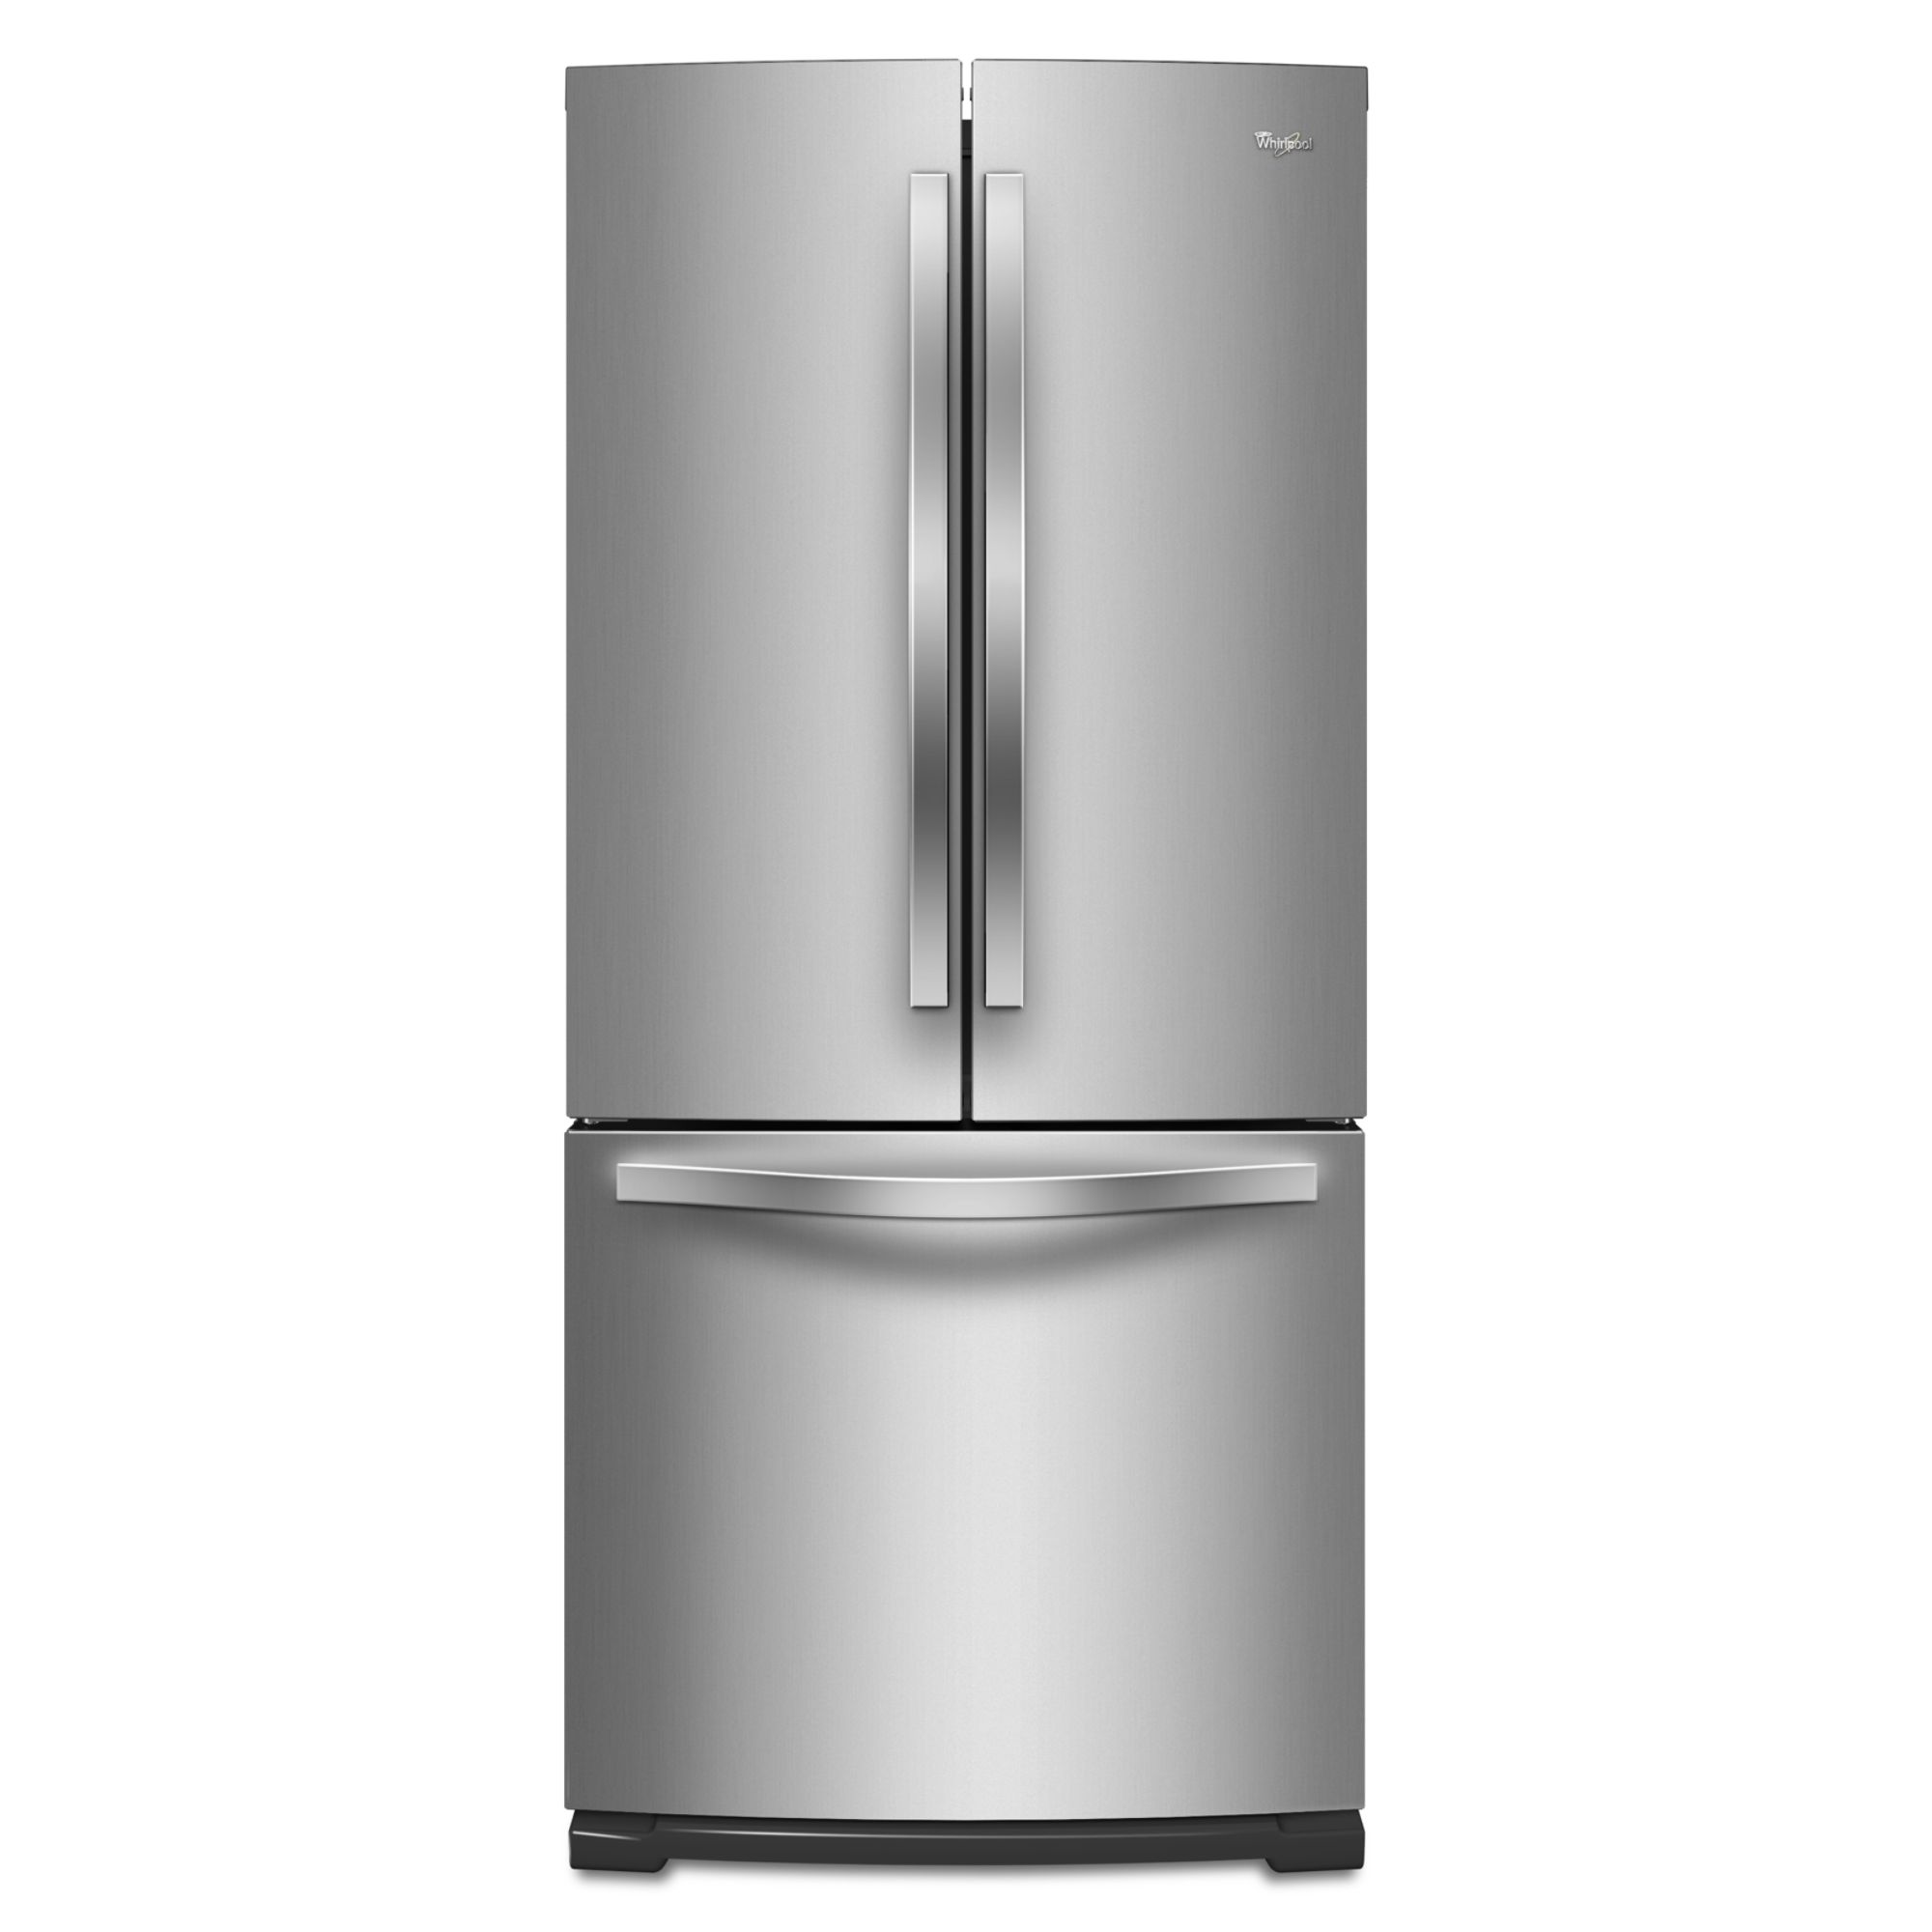 Whirlpool 19.6 cu. ft. French-Door Bottom-Freezer Refrigerator - Stainless Steel